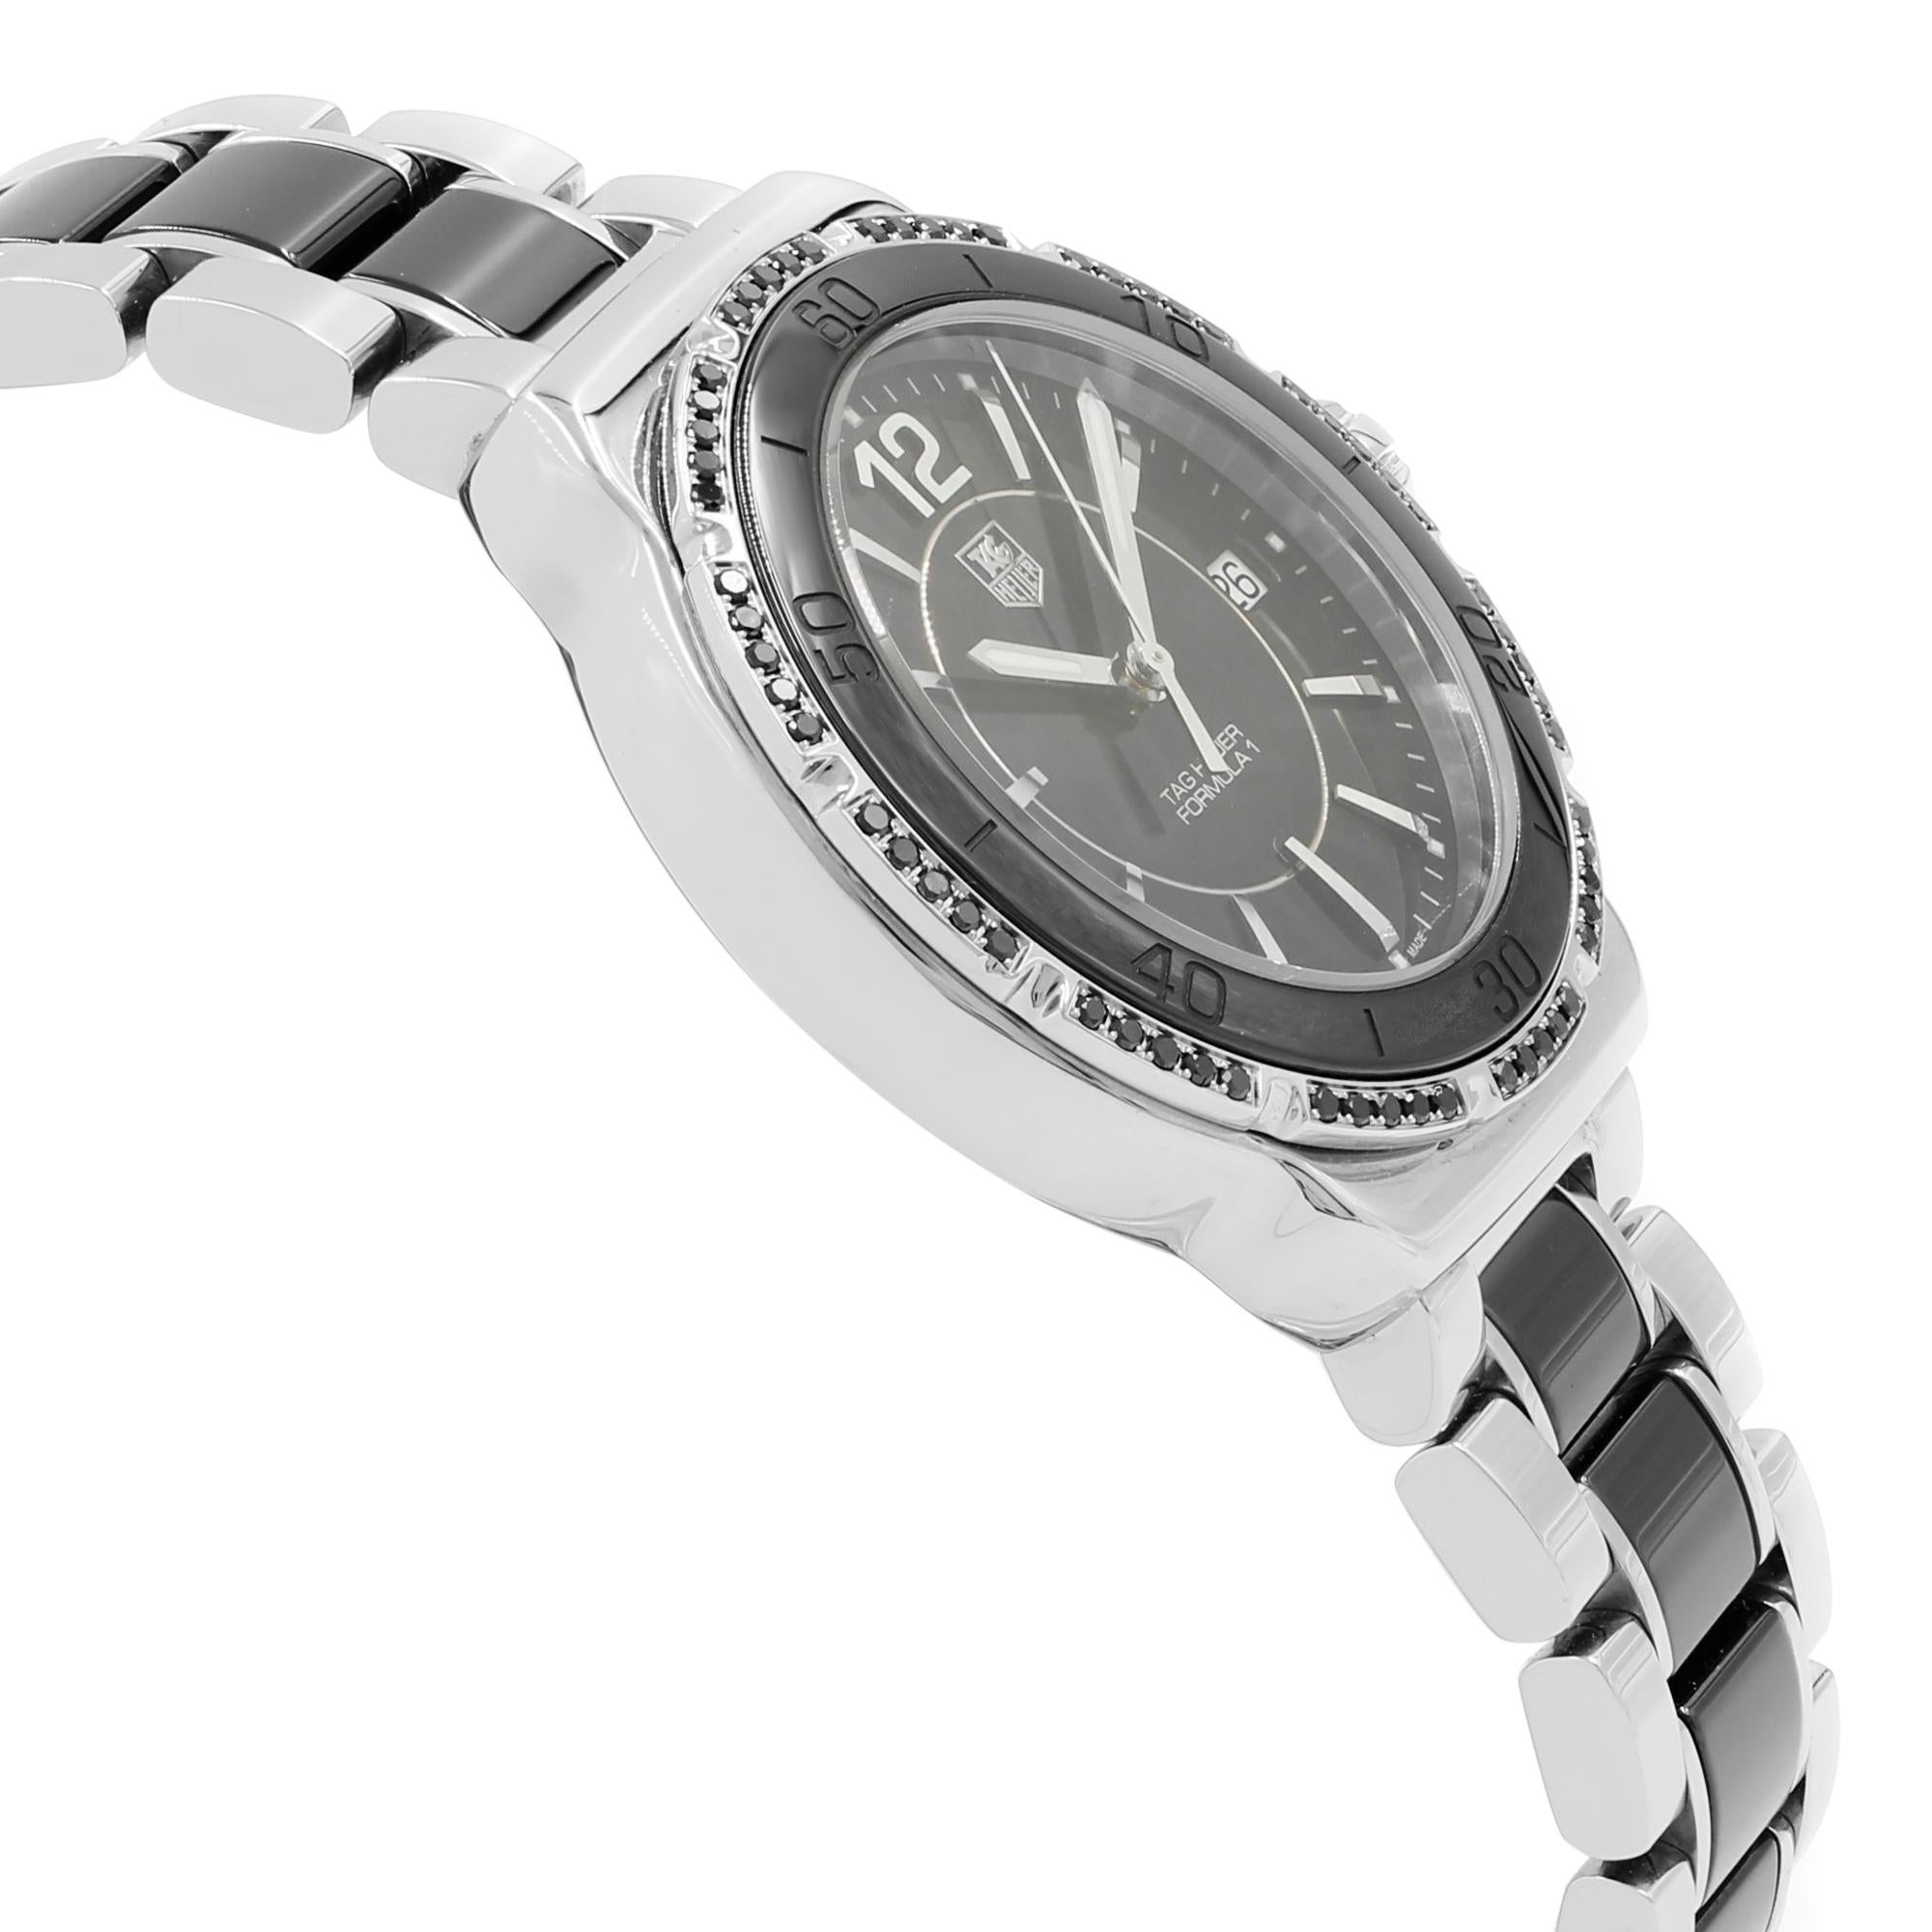 tag heuer formula 1 women's watch price